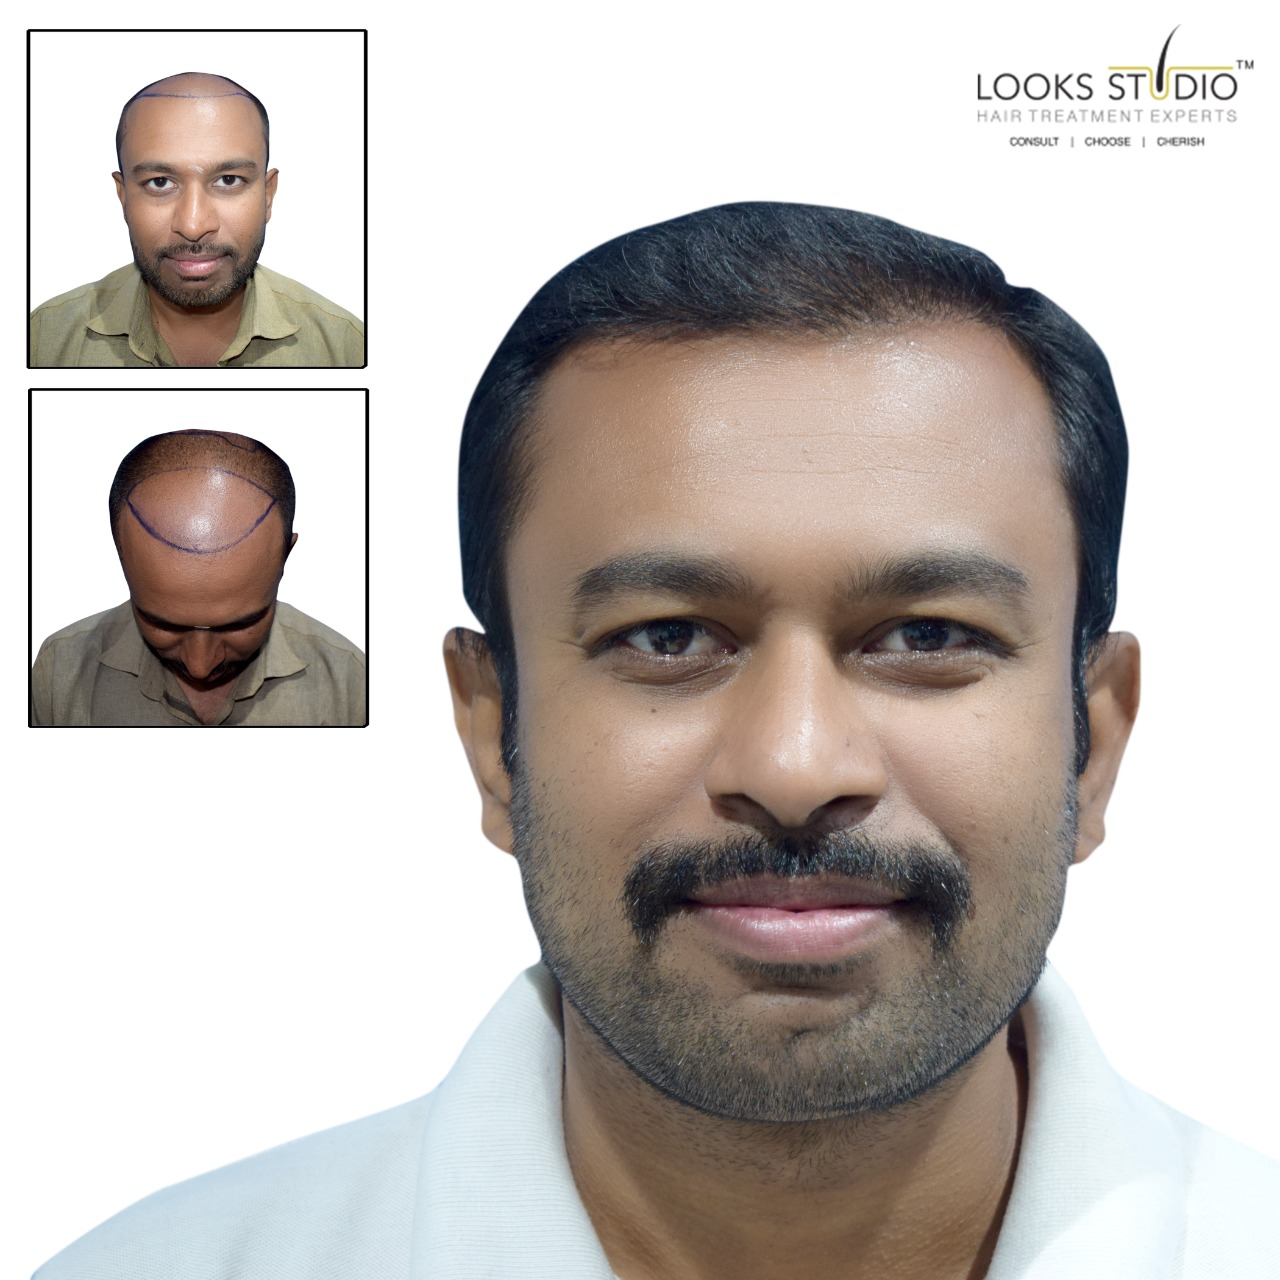 Hair Transplant in Bangalore: Looks Studio